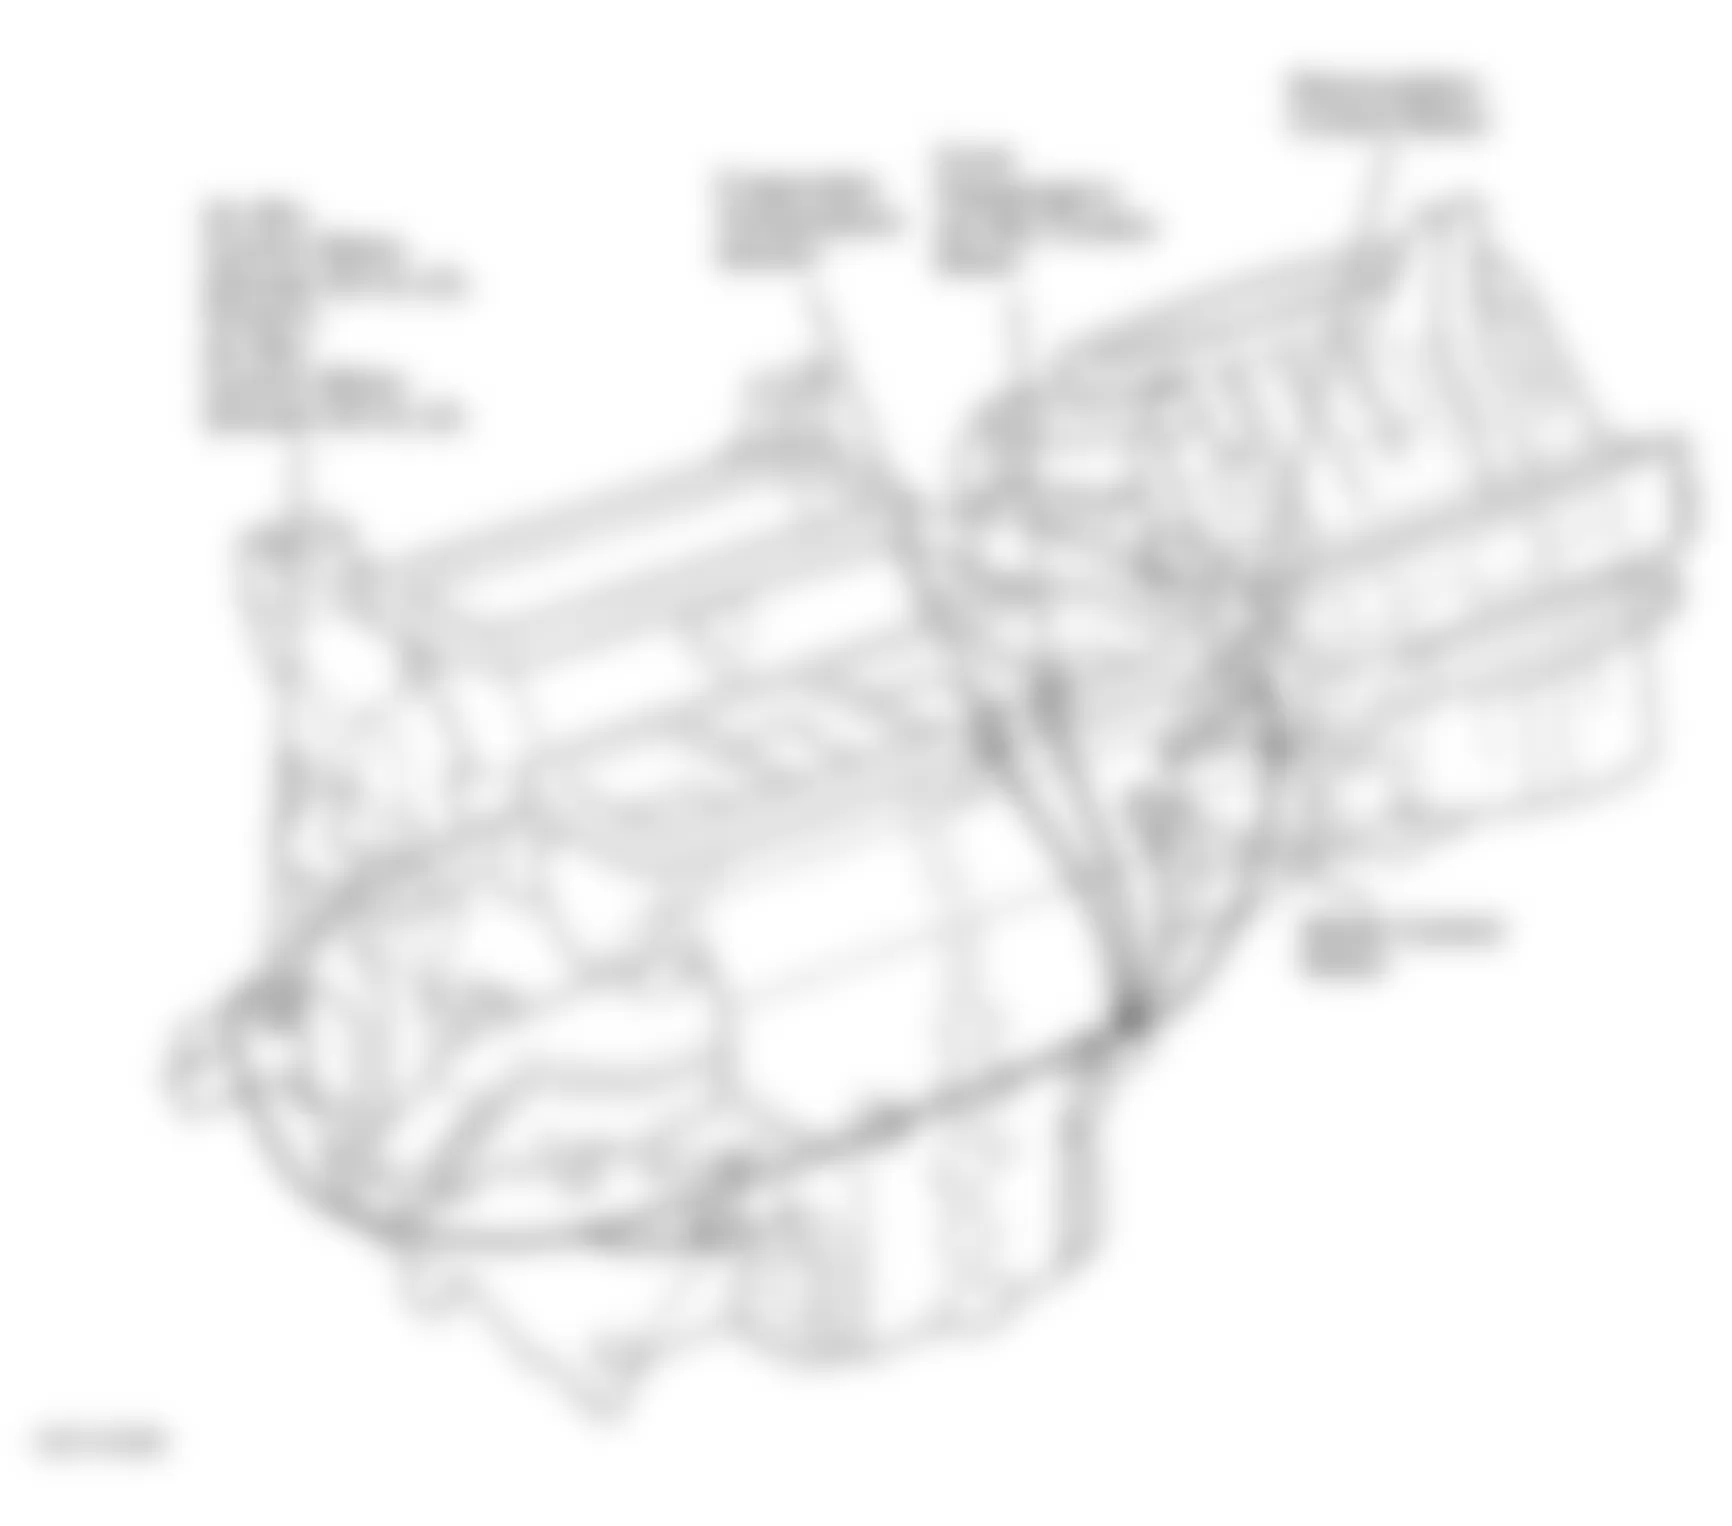 Honda Accord DX 2003 - Component Locations -  View Of HVAC Unit